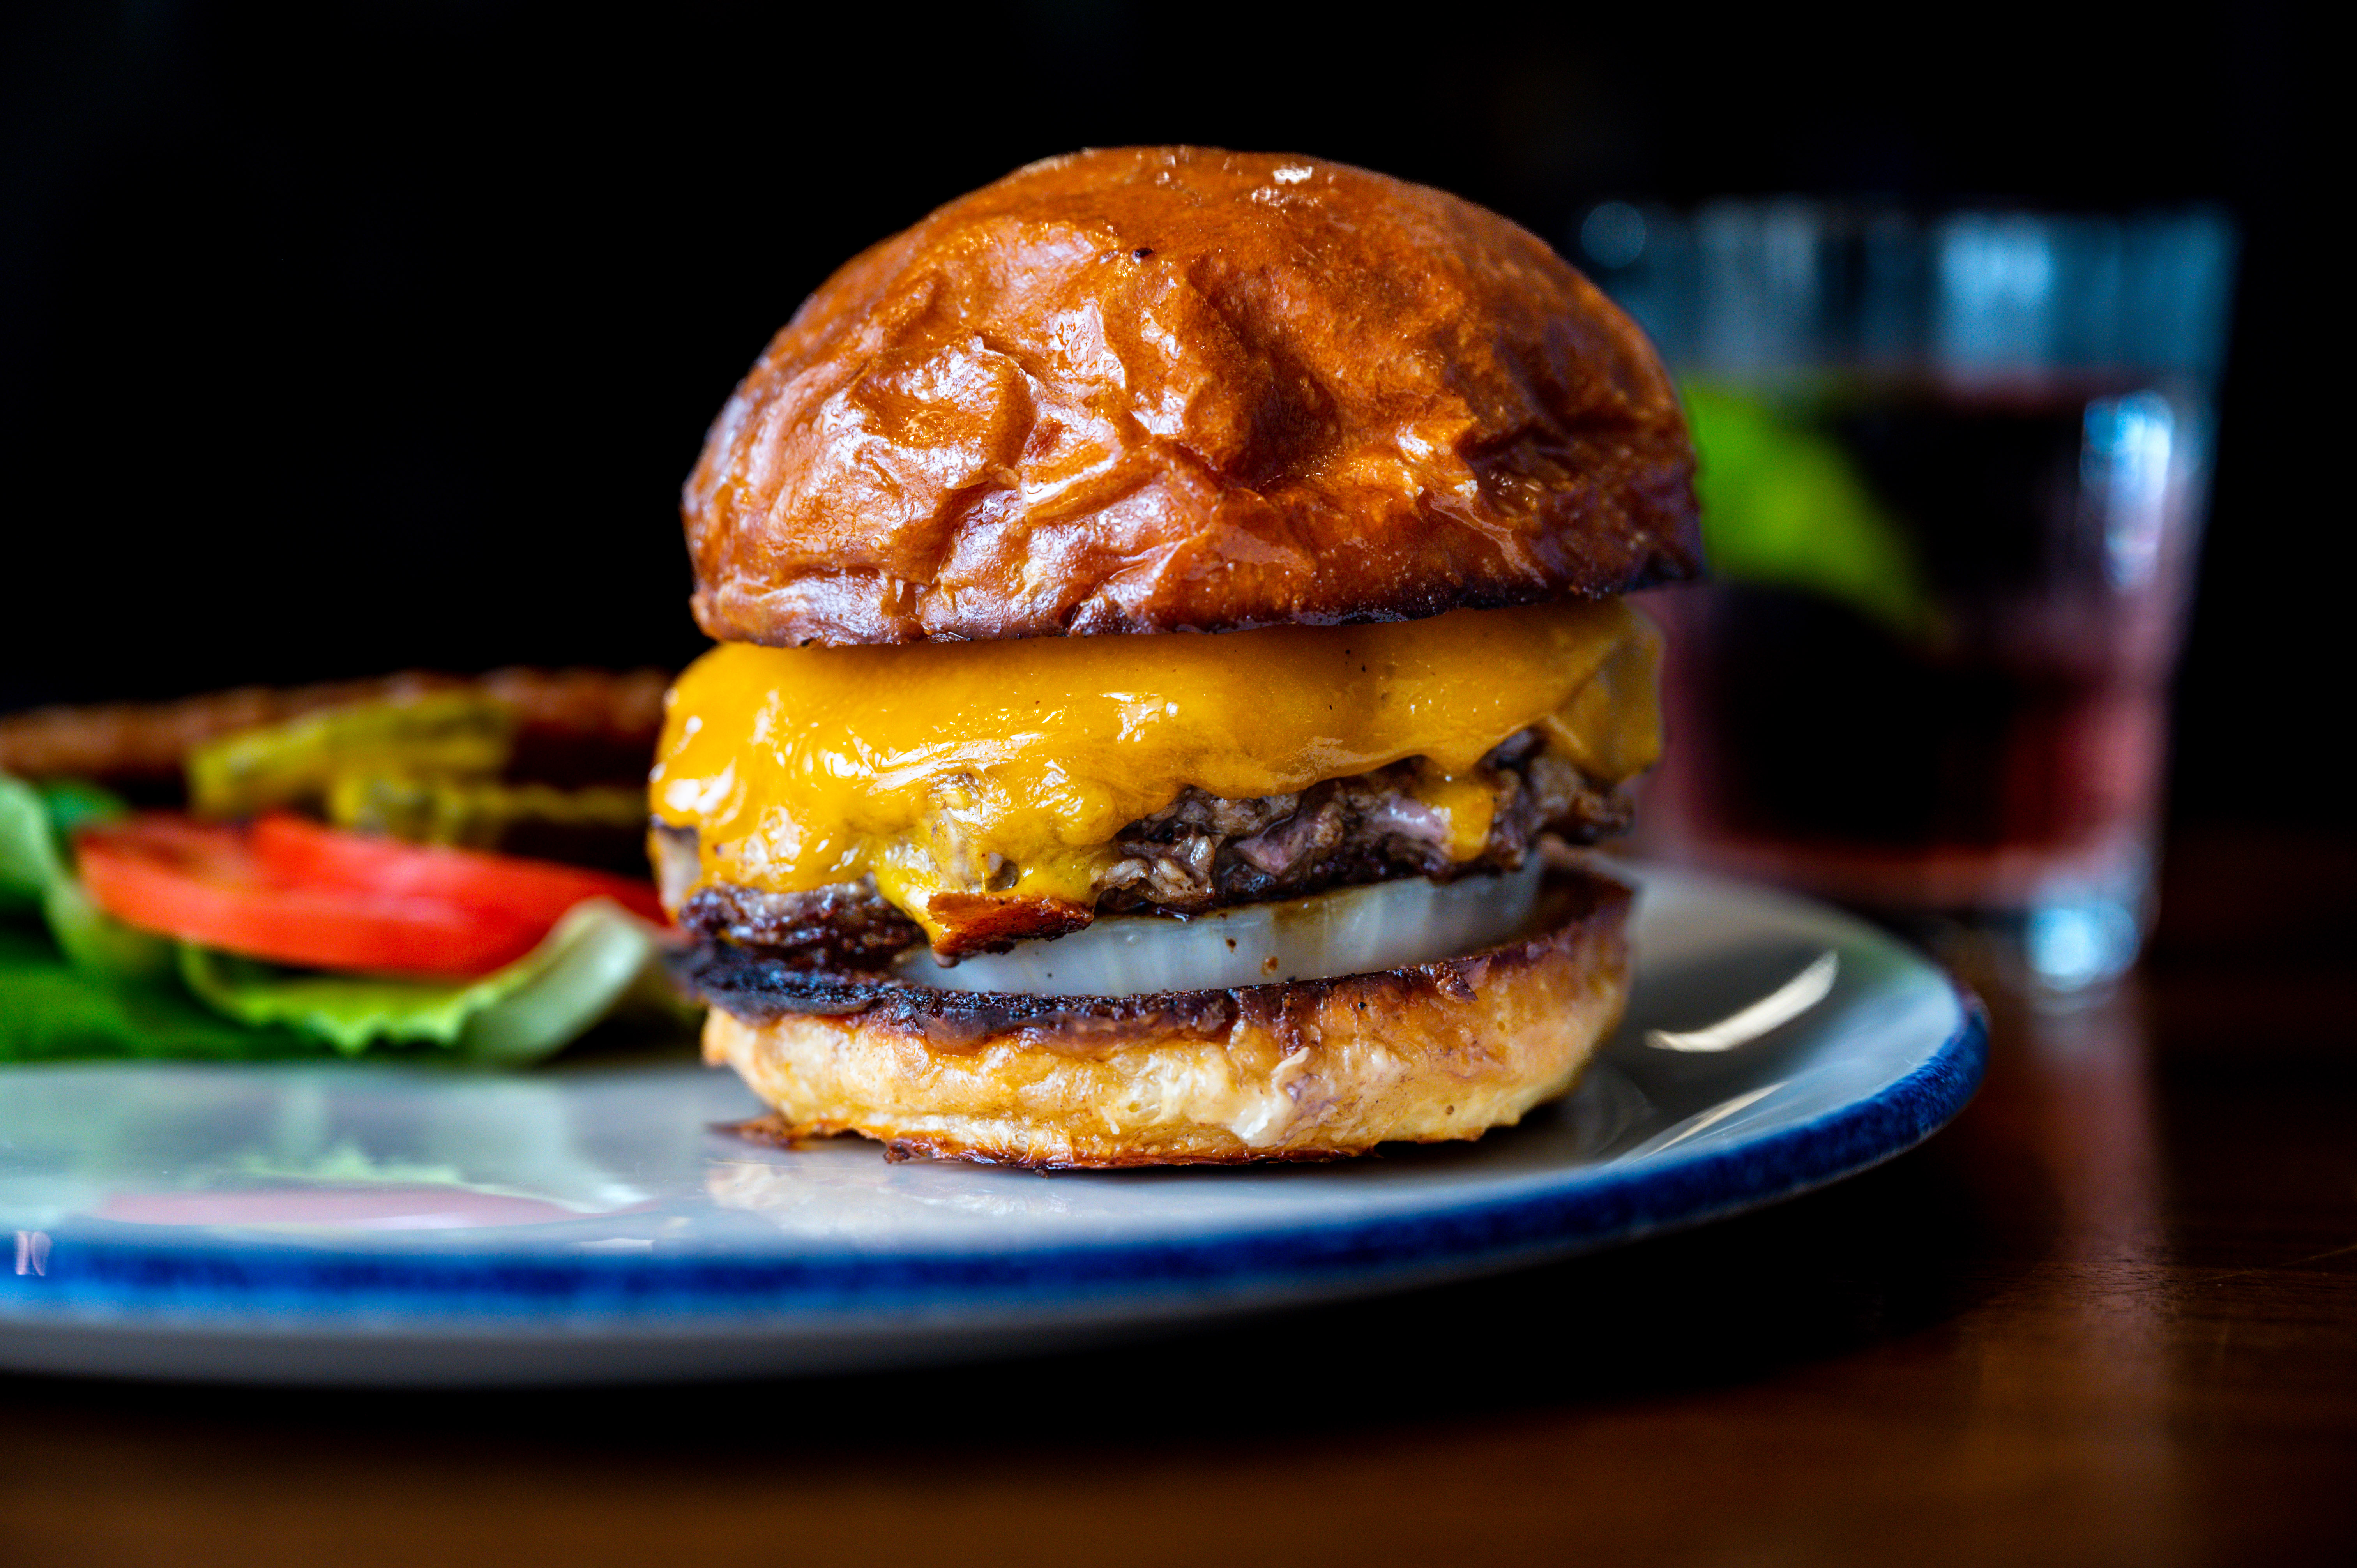 A cheeseburger on a blue plate